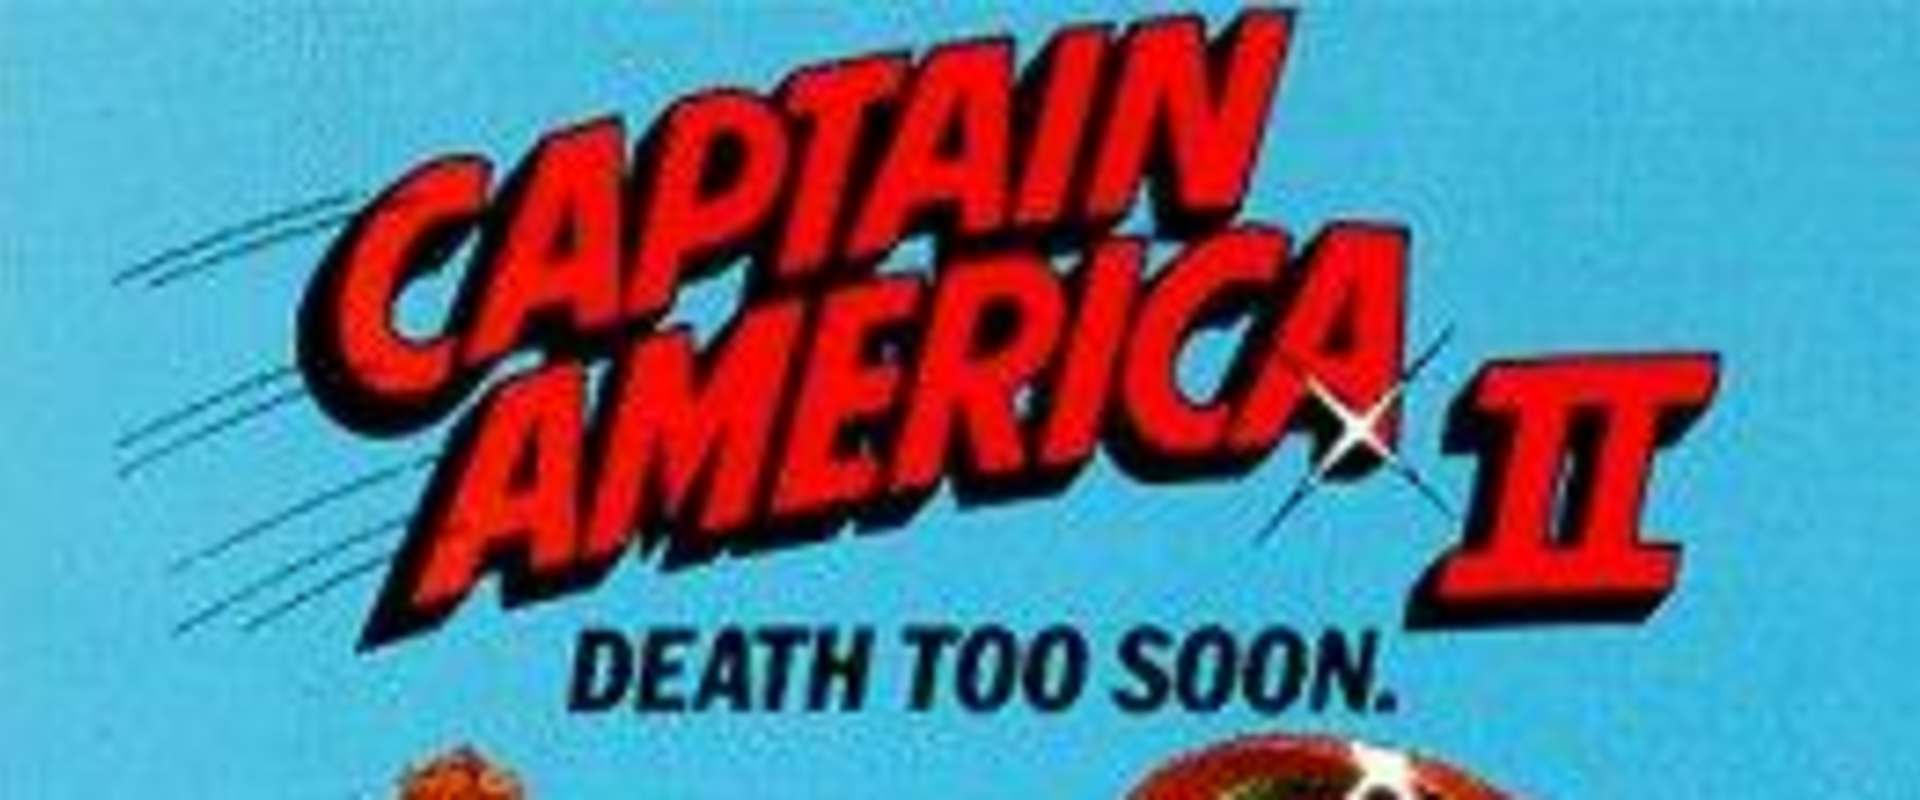 Captain America II: Death Too Soon background 1